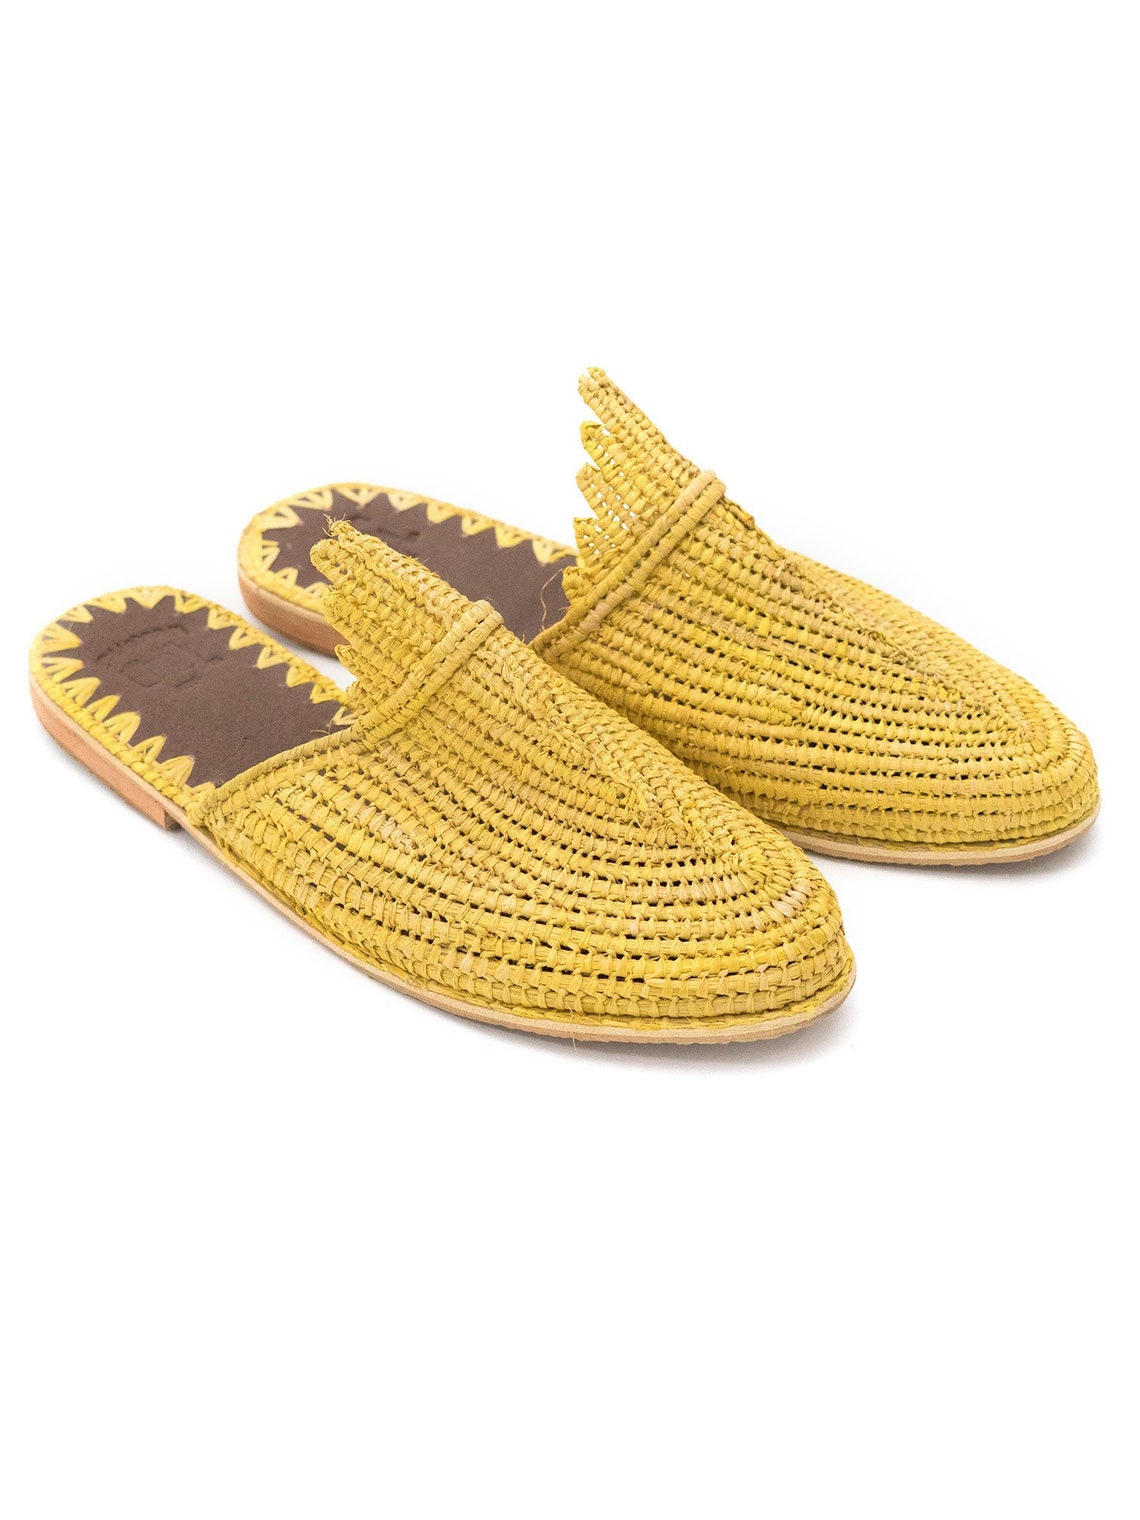 Moroccan raphia Shoes raphia slippersbirthday gift | Etsy